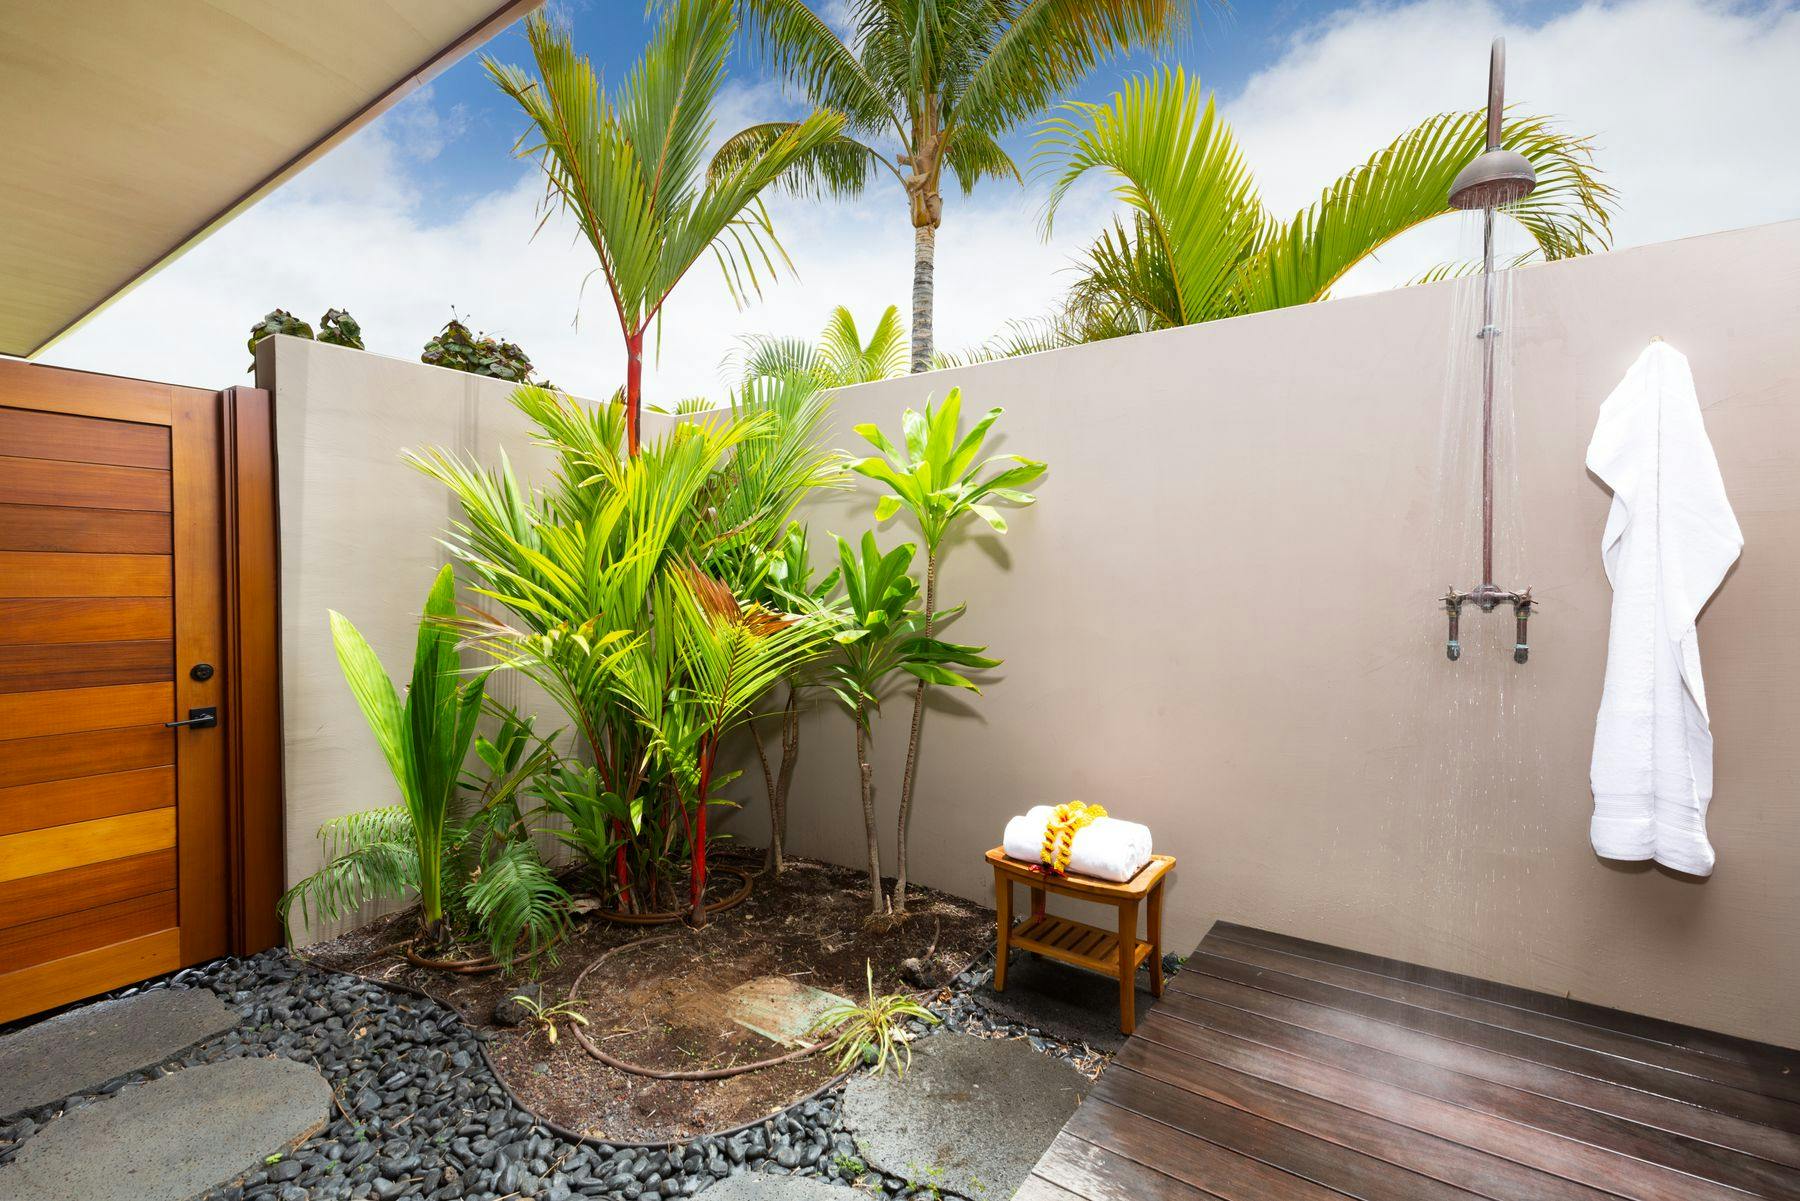 Outdoor shower at Hawaii vacation rental